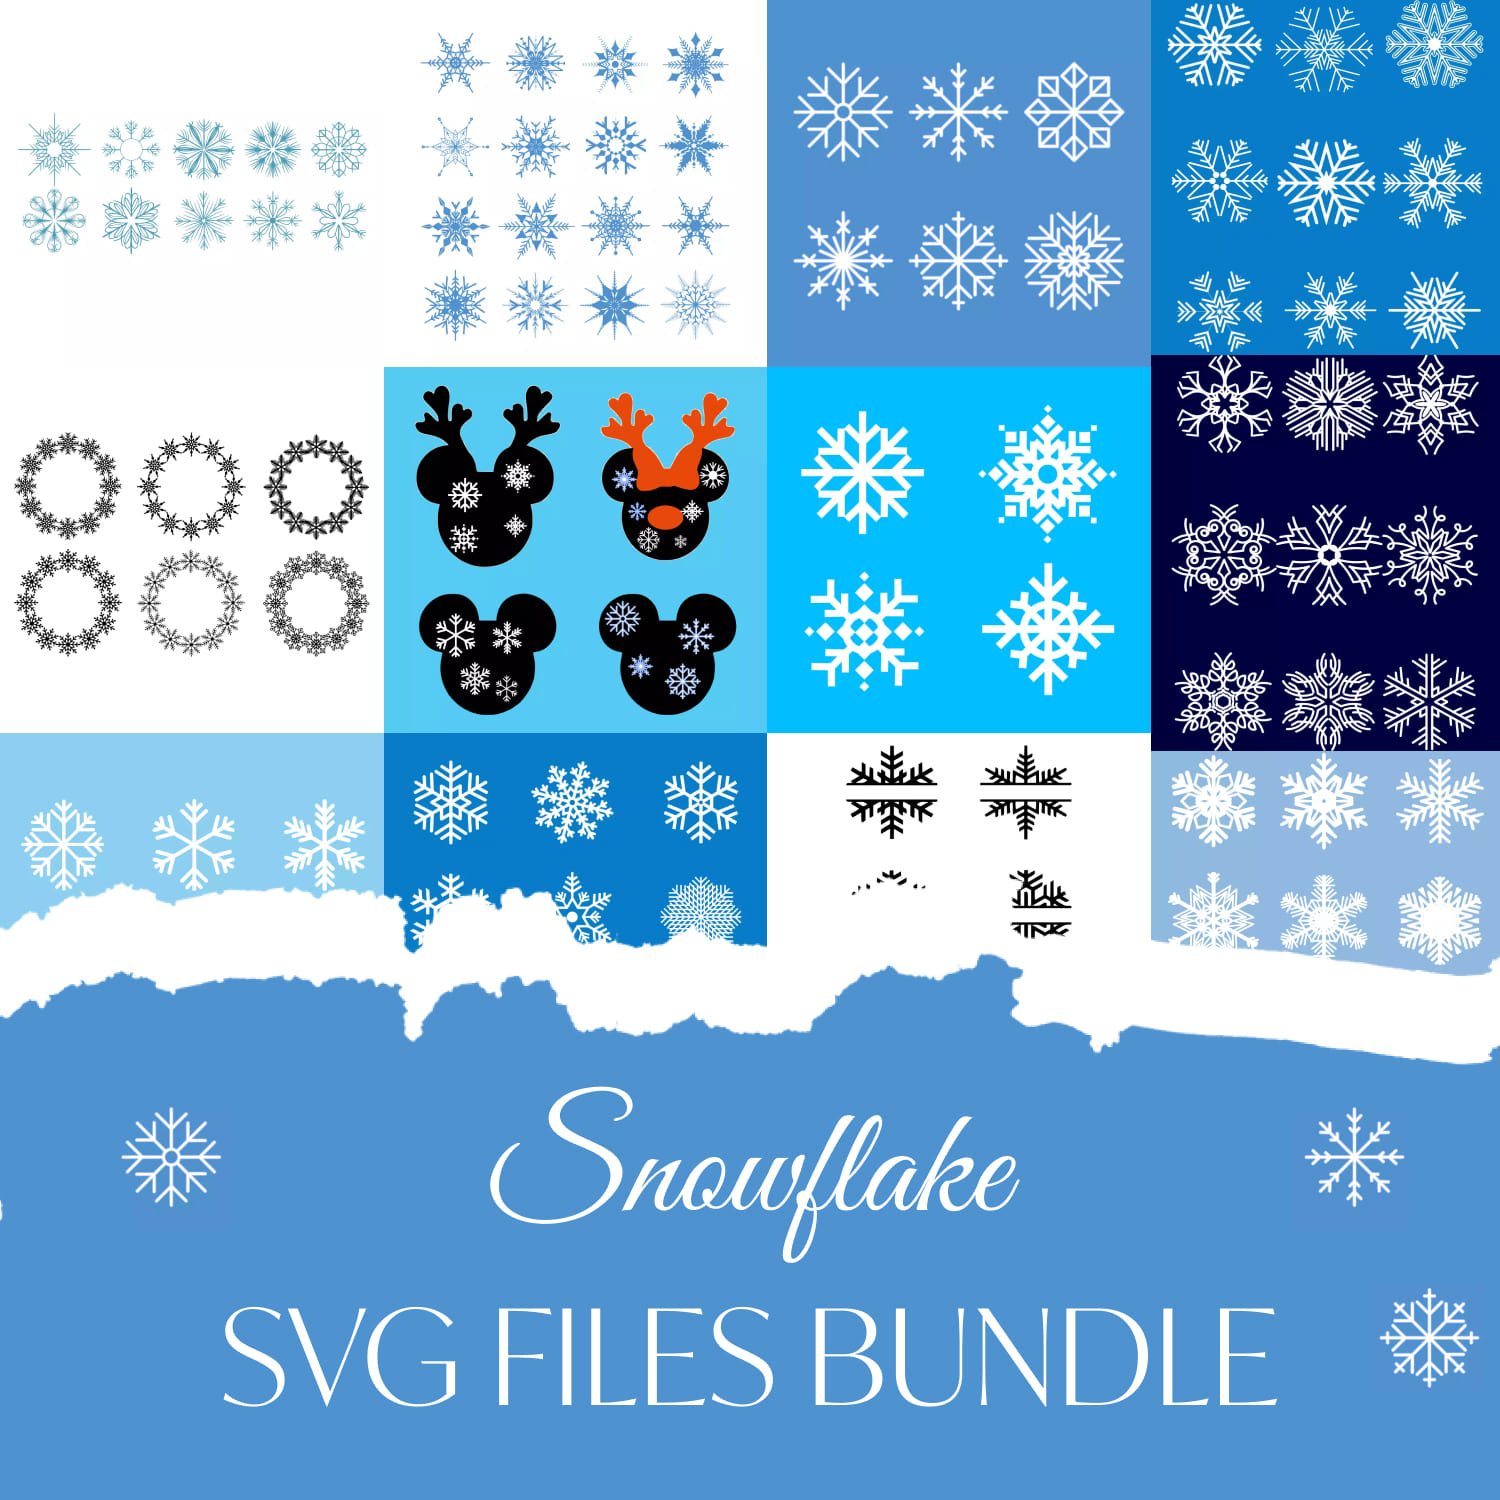 Snowflake SVG Files Bundle.